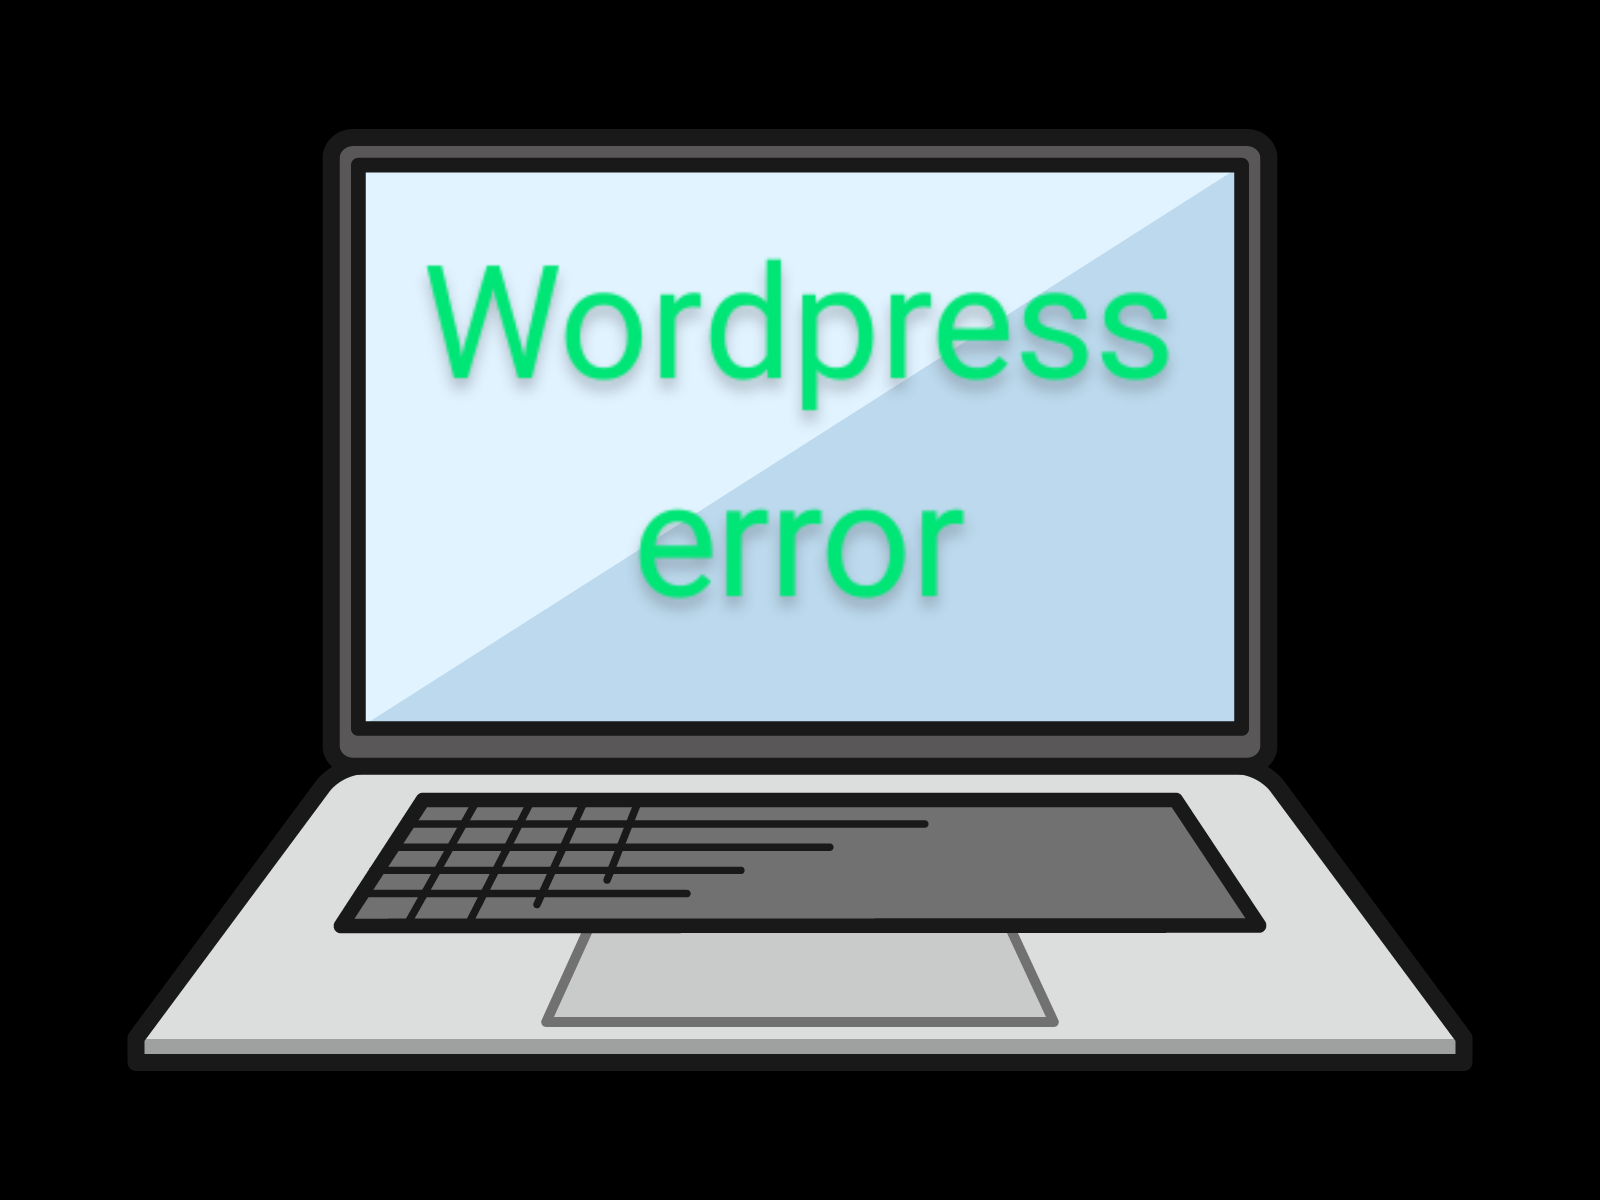 Wordpresserror